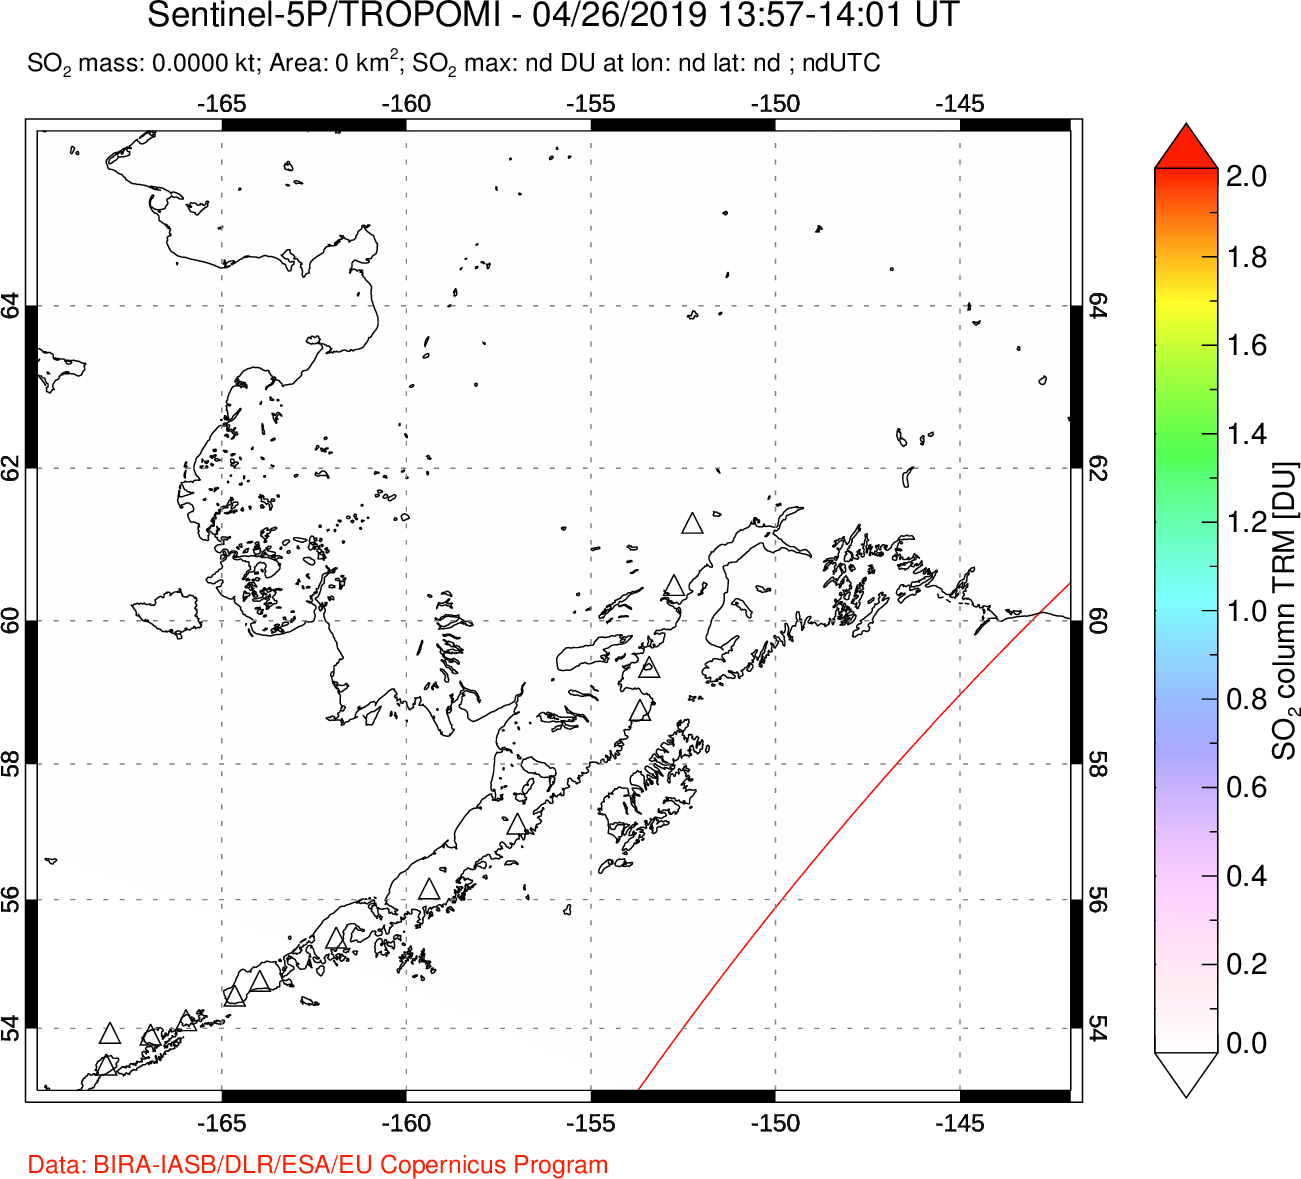 A sulfur dioxide image over Alaska, USA on Apr 26, 2019.